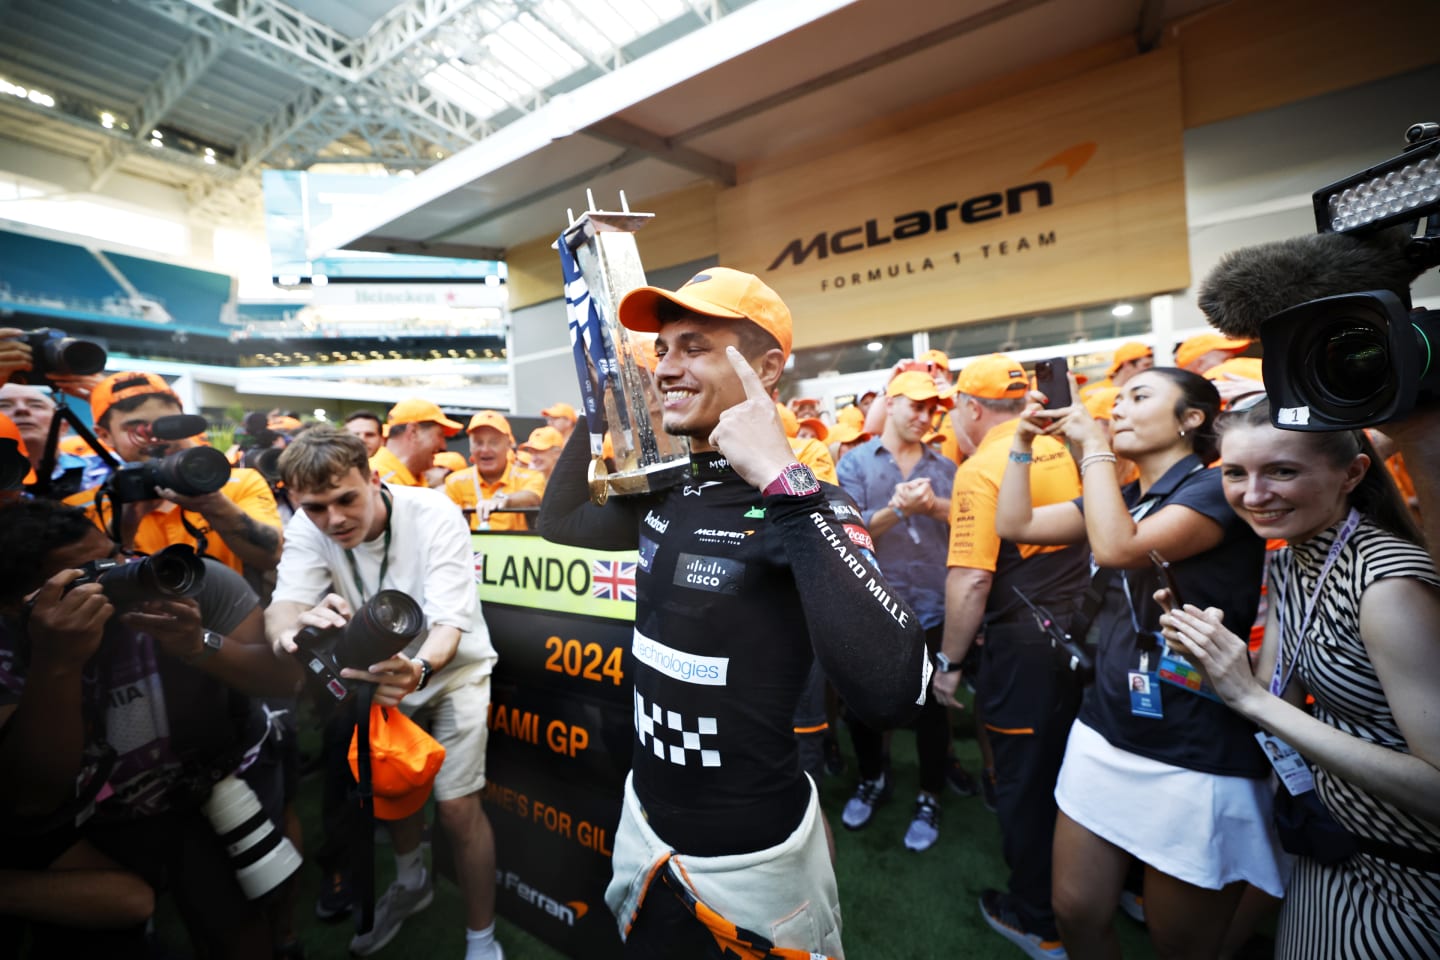 MIAMI, FLORIDA - MAY 05: Race winner Lando Norris of Great Britain and McLaren celebrates victory